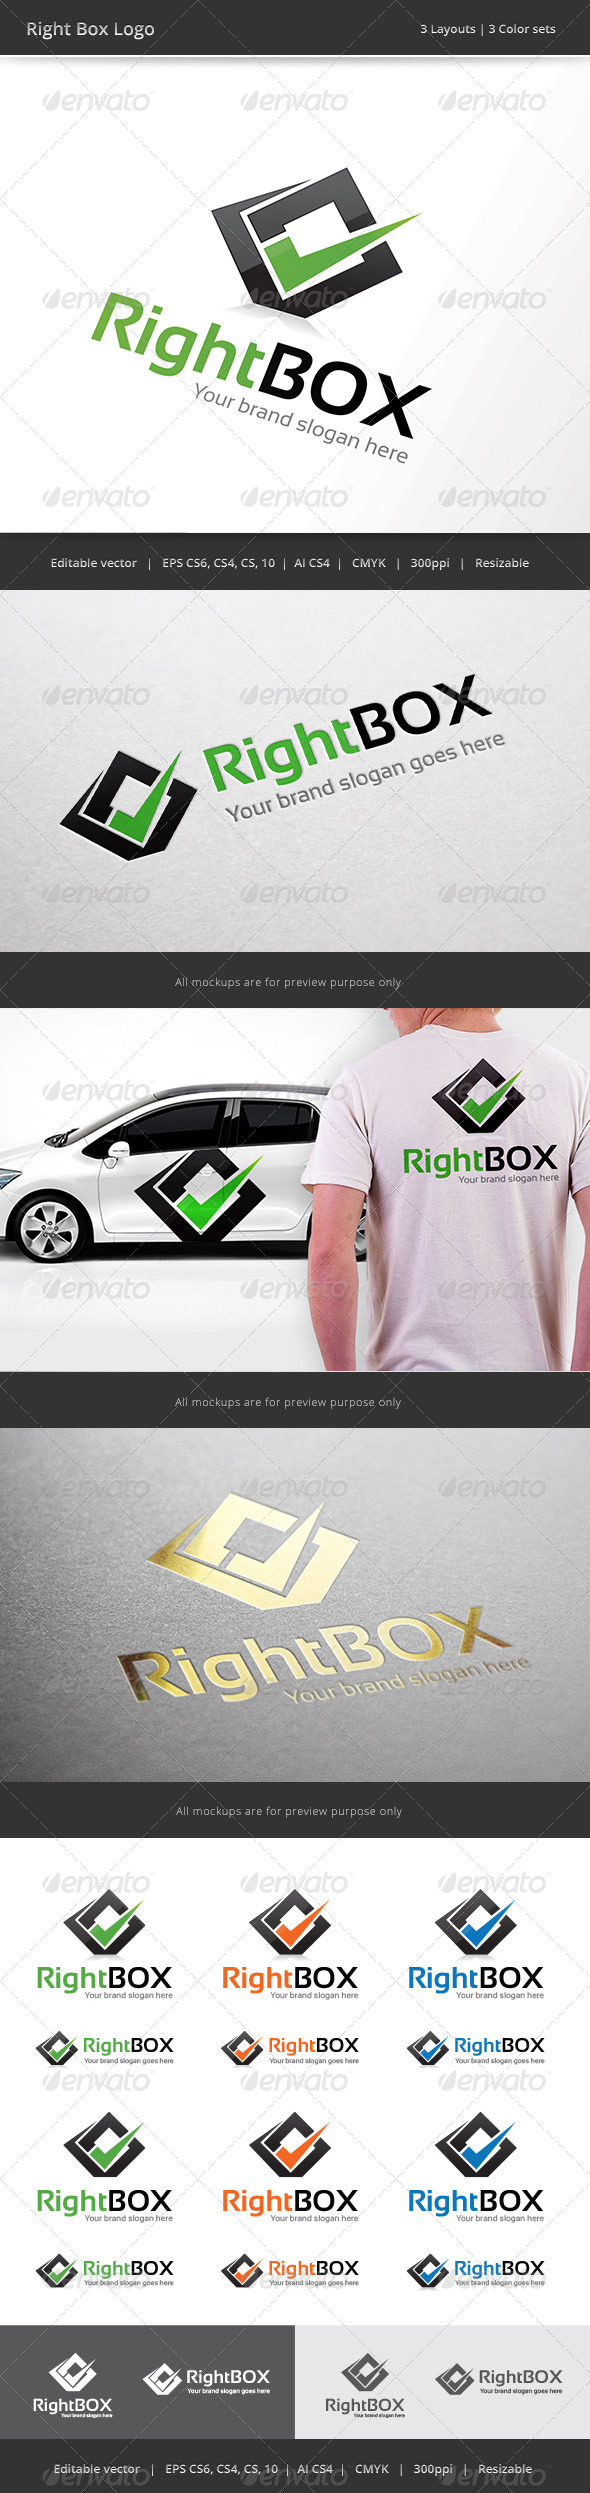 Right Box Logo - Vector Abstract